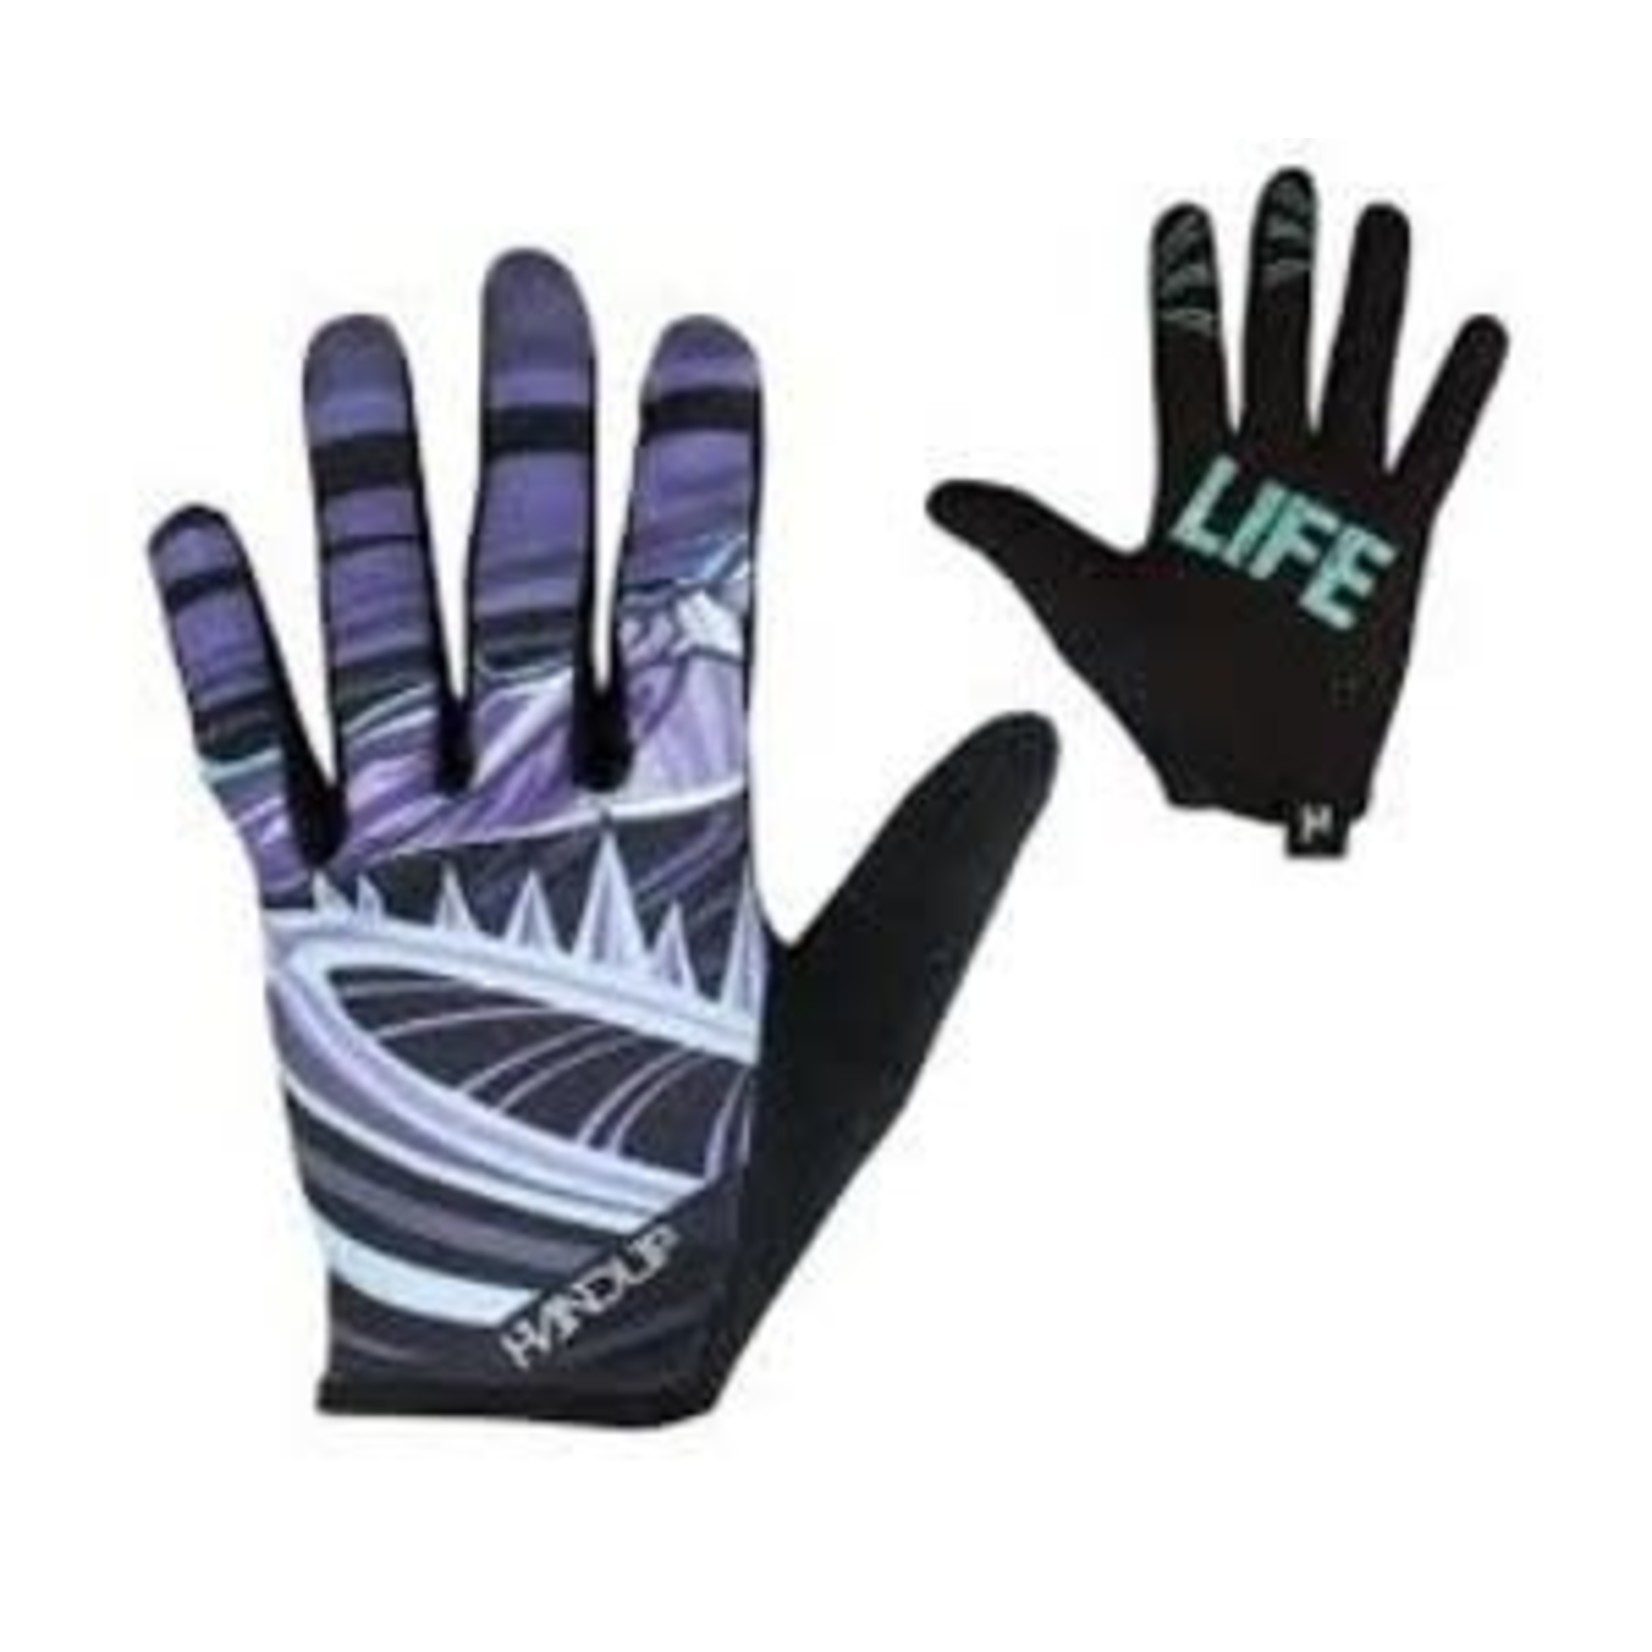 Handup Most days Mtn Life purple/blue gloves L